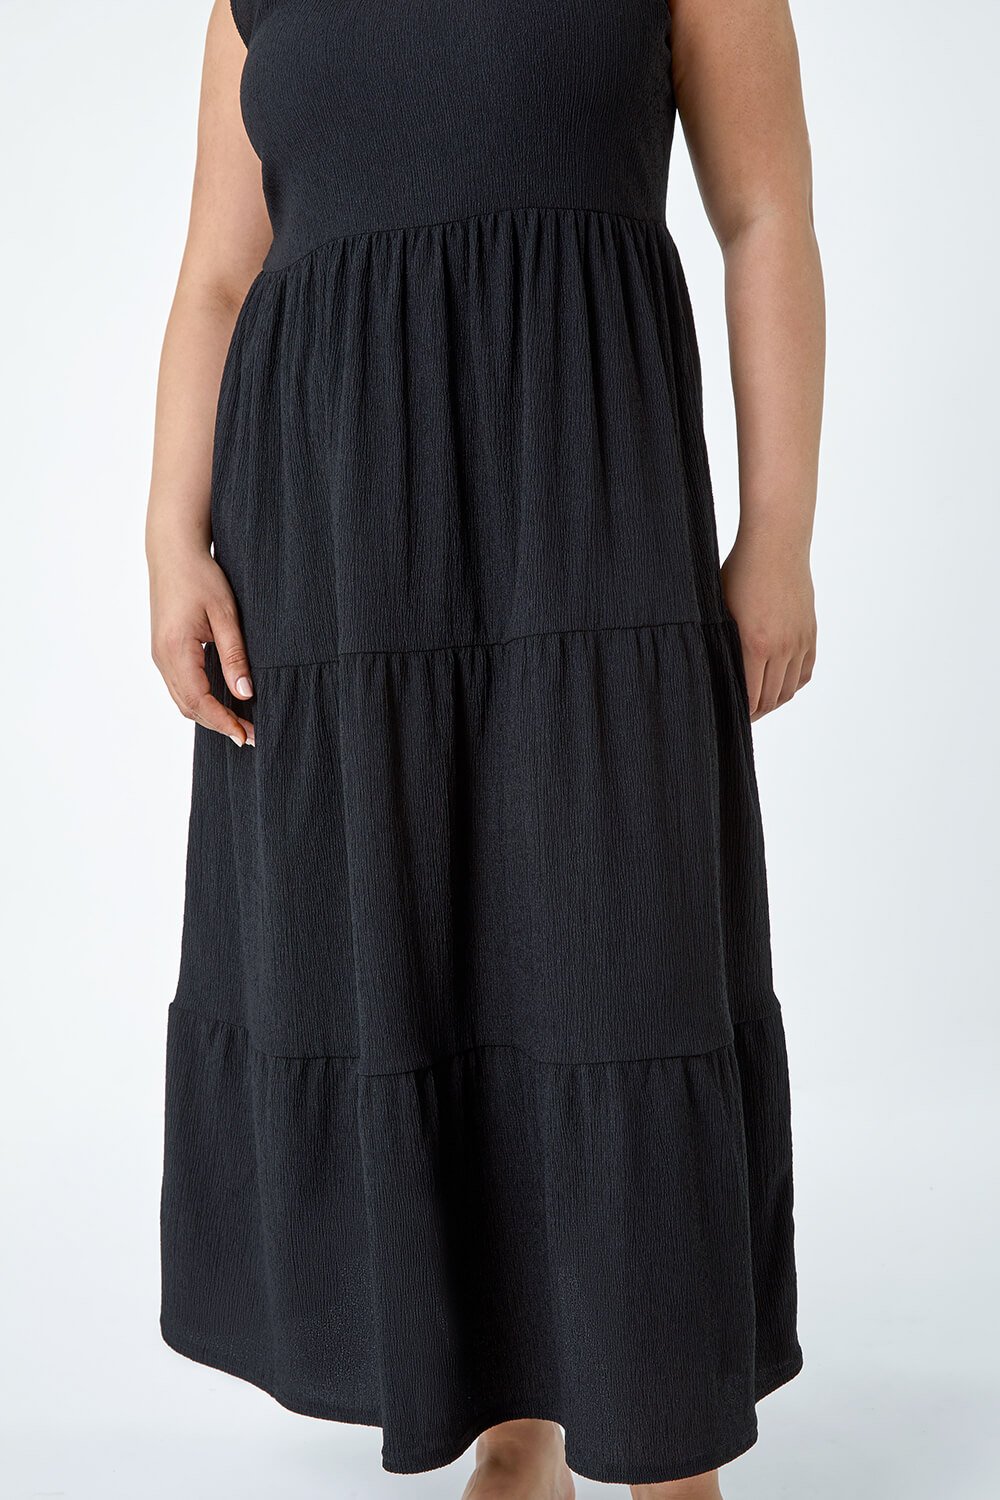 Black Curve Plain Textured Tiered Midi Dress, Image 5 of 5